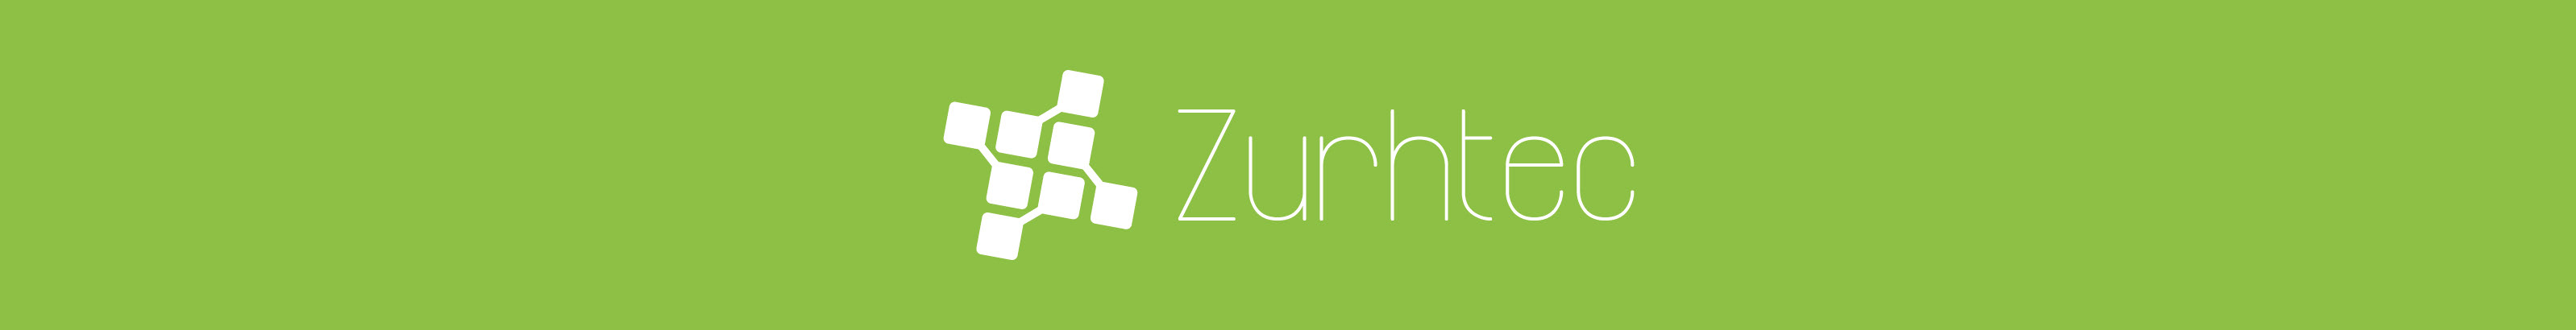 Zurhtec Digital Media's profile banner